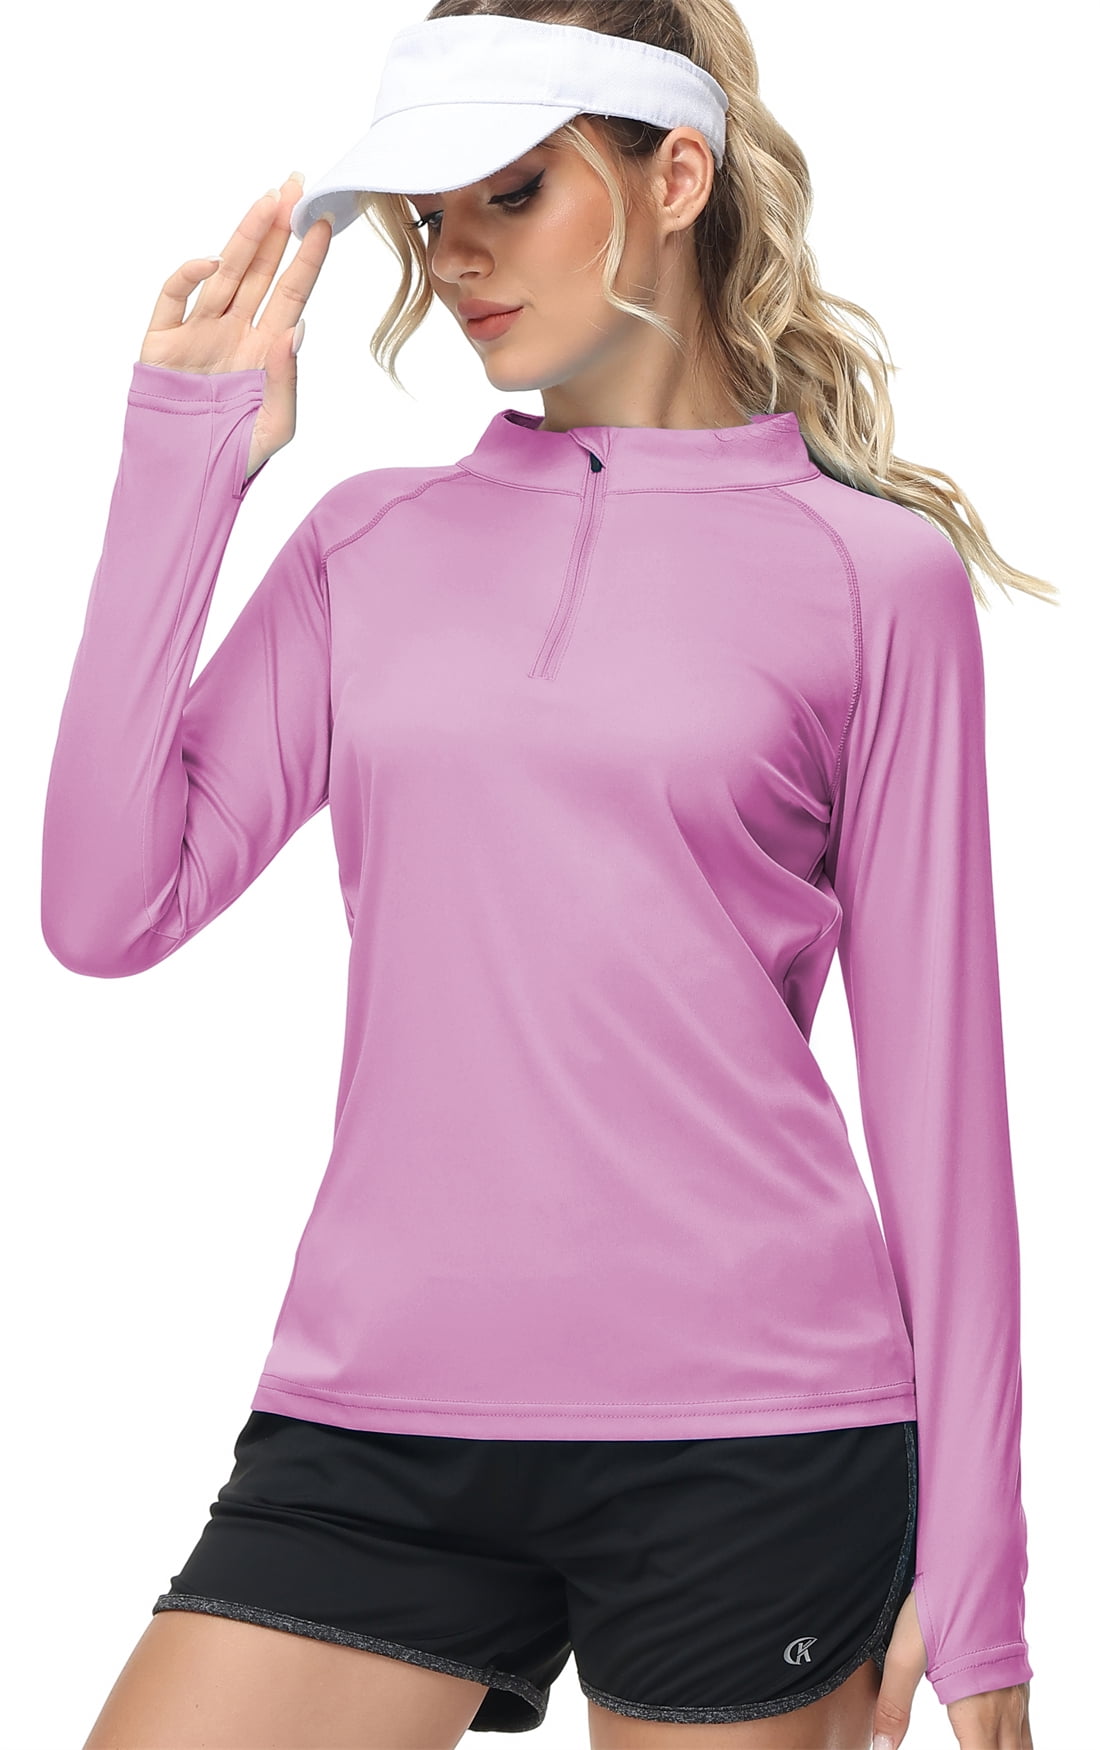 QPNGRP Women's Long Sleeve Shirts UPF 50+ Sun Protection SPF